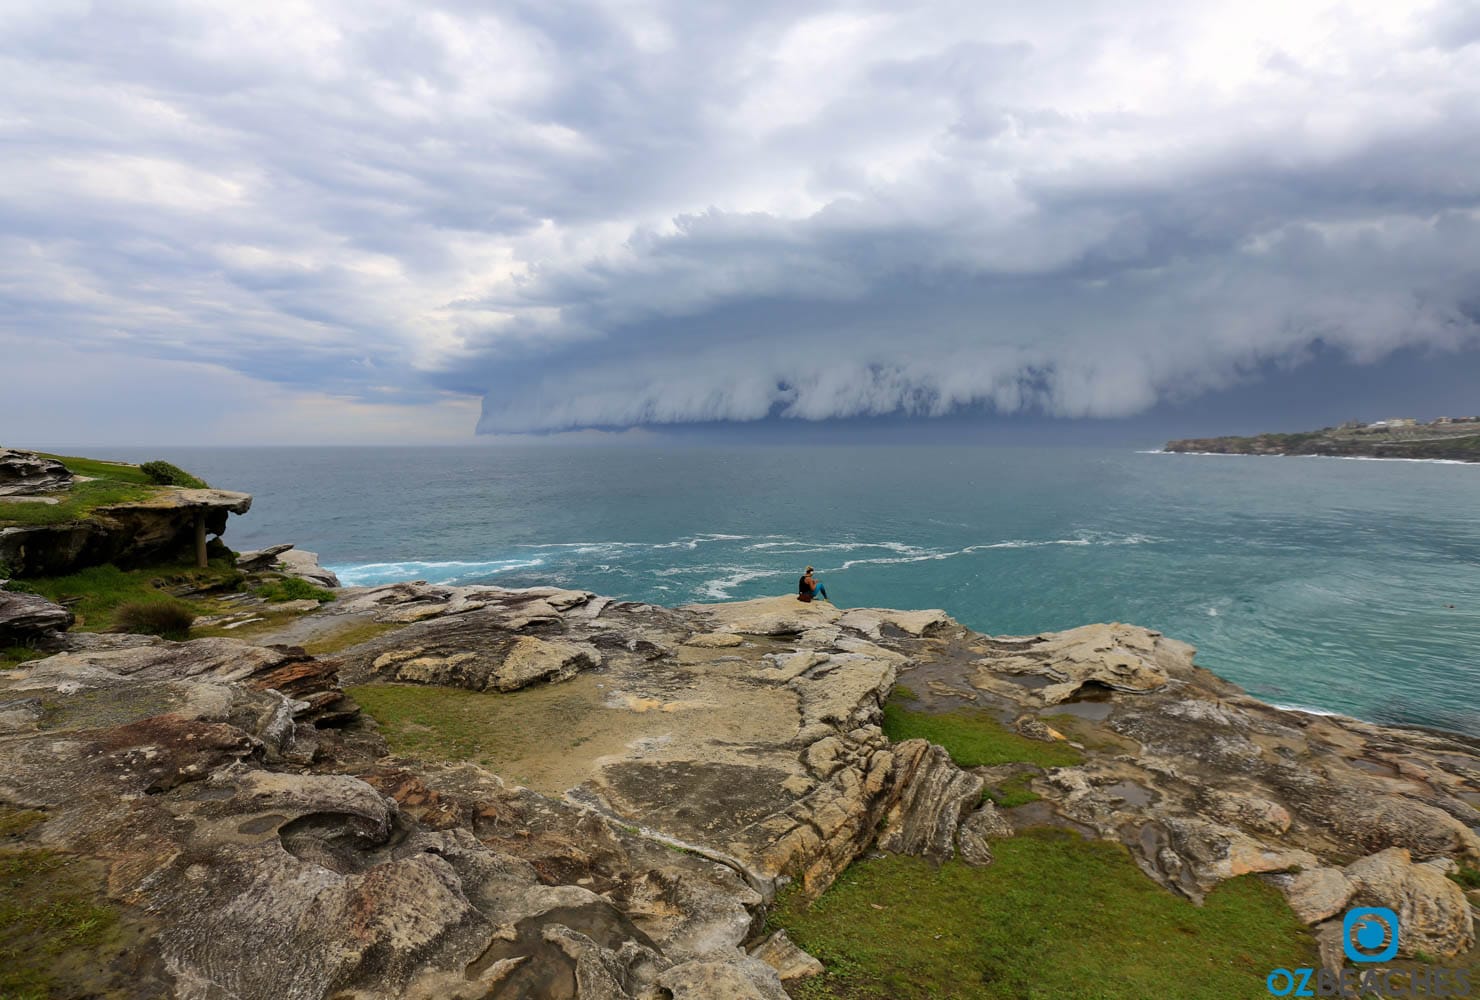 Supercell storm approaching Tamarama Beach